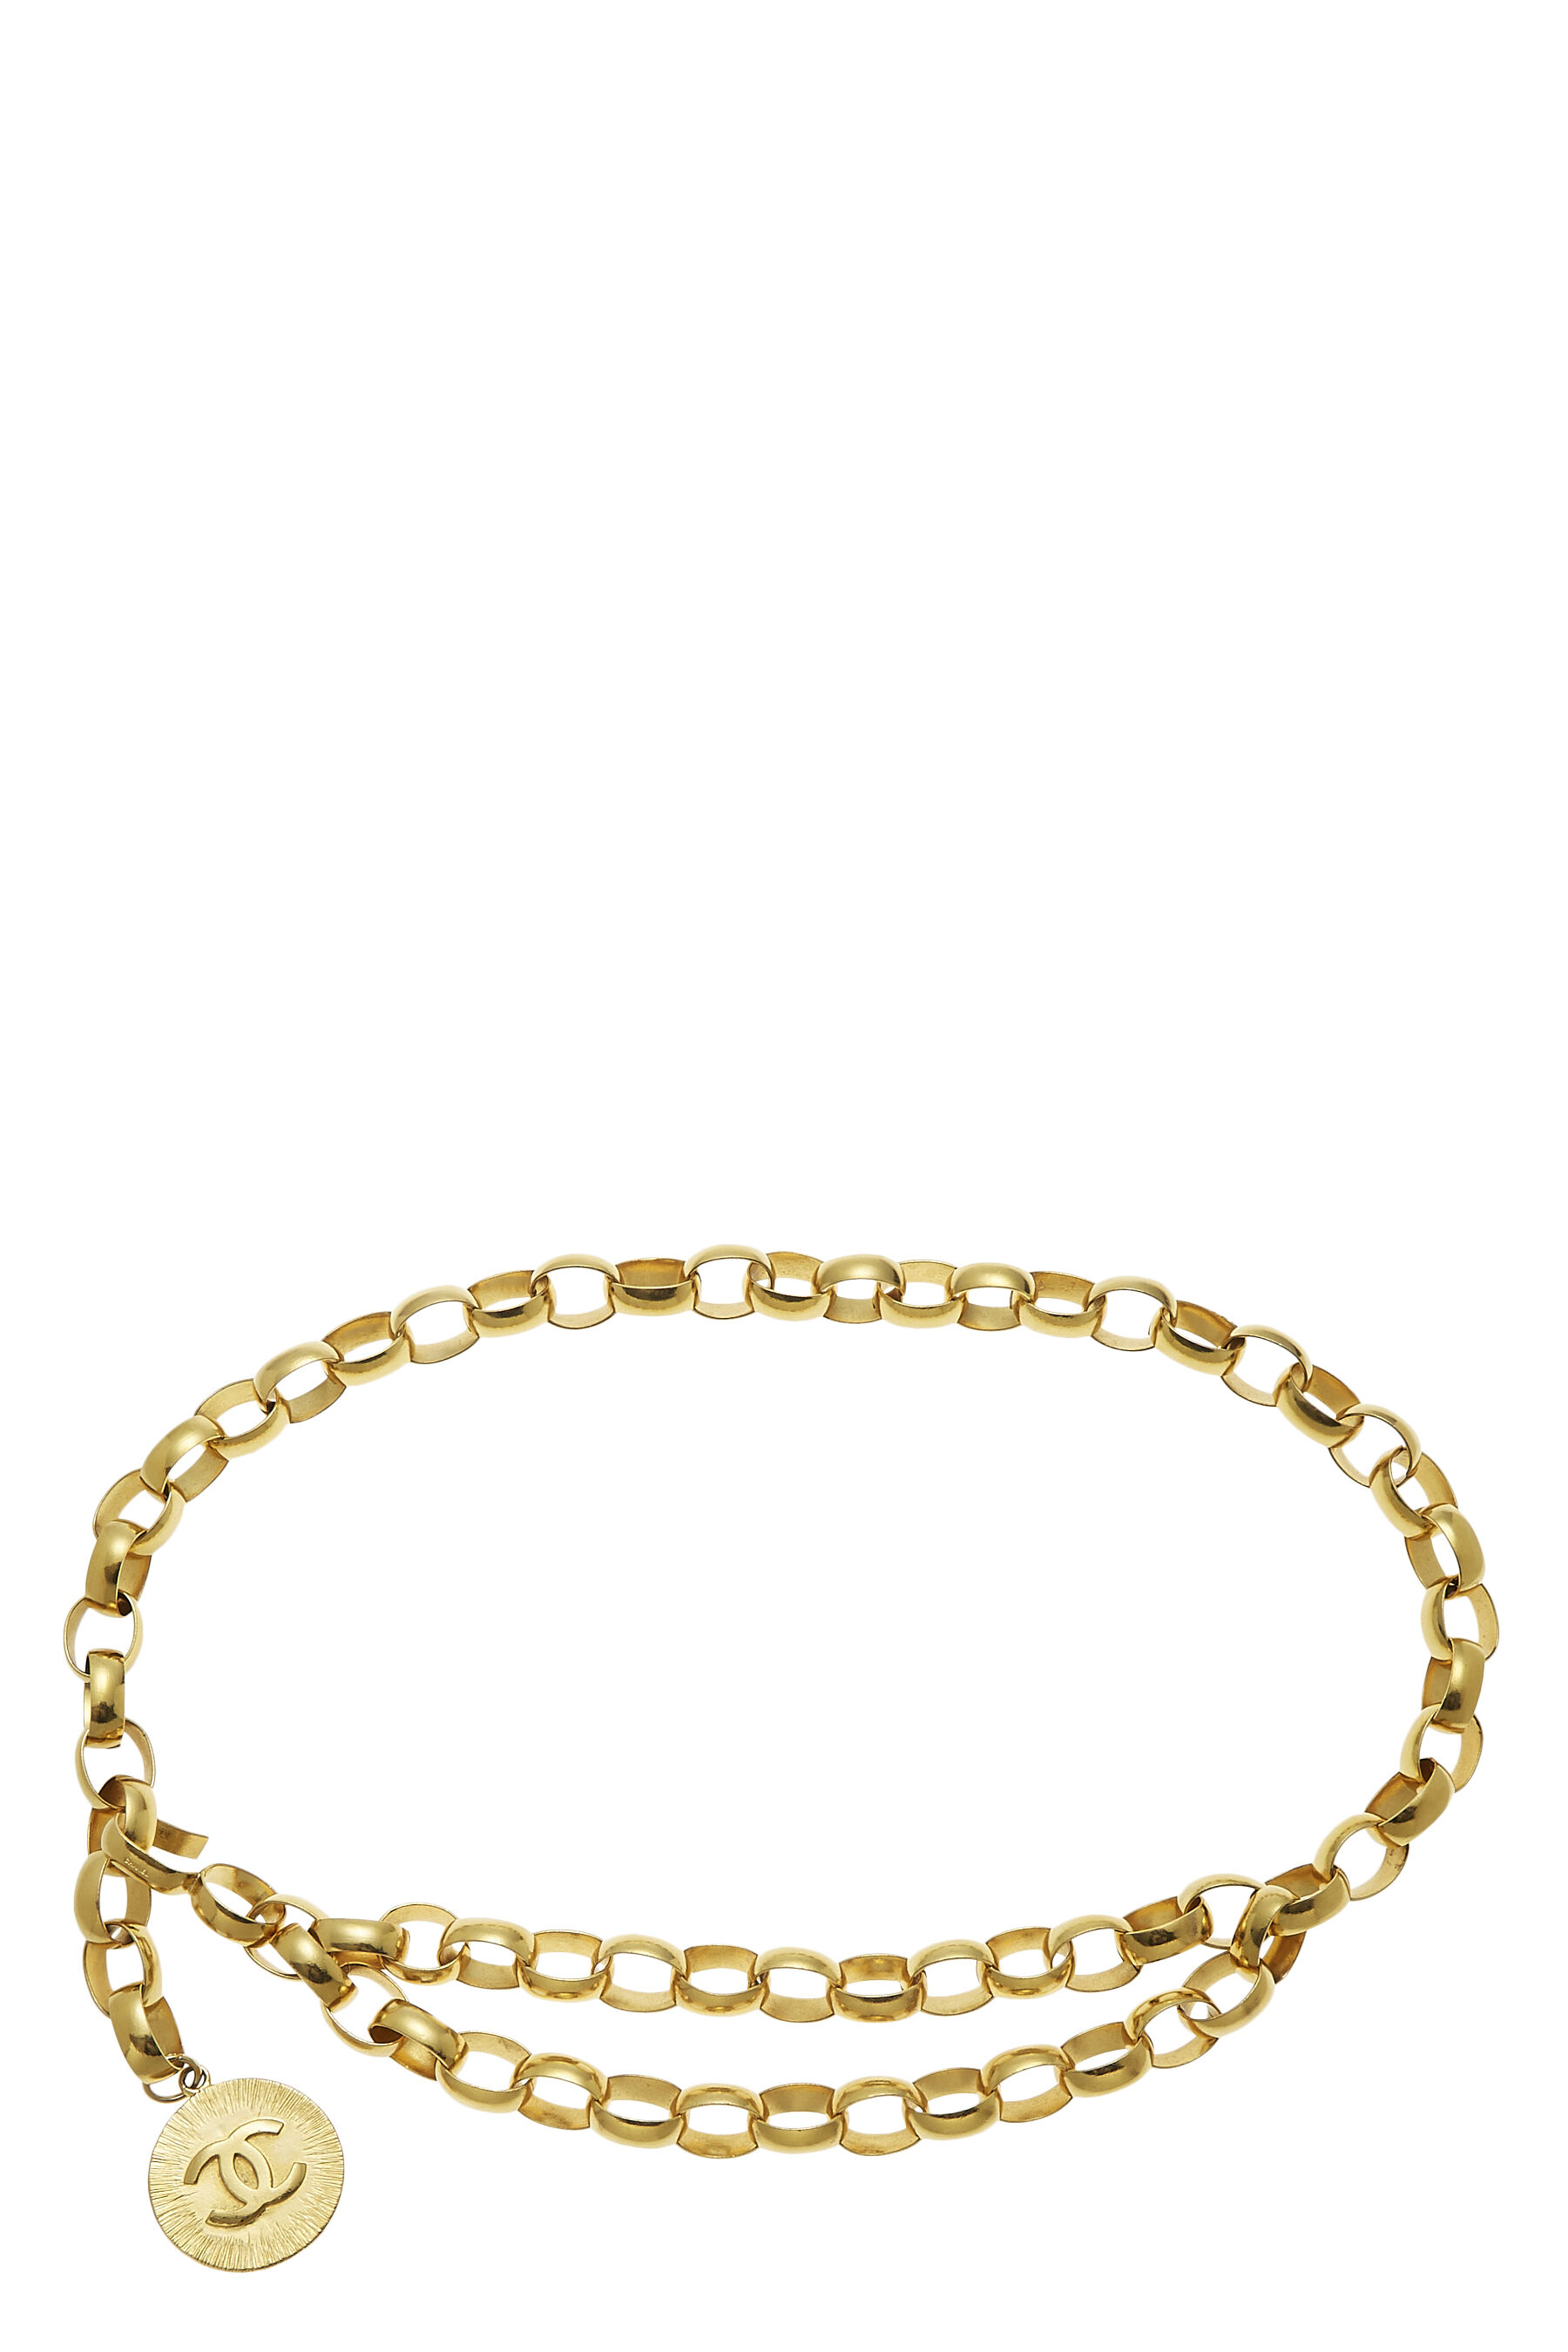 Chanel Gold 'CC' Sunburst Chain Belt 3 Q6AABV17DB074